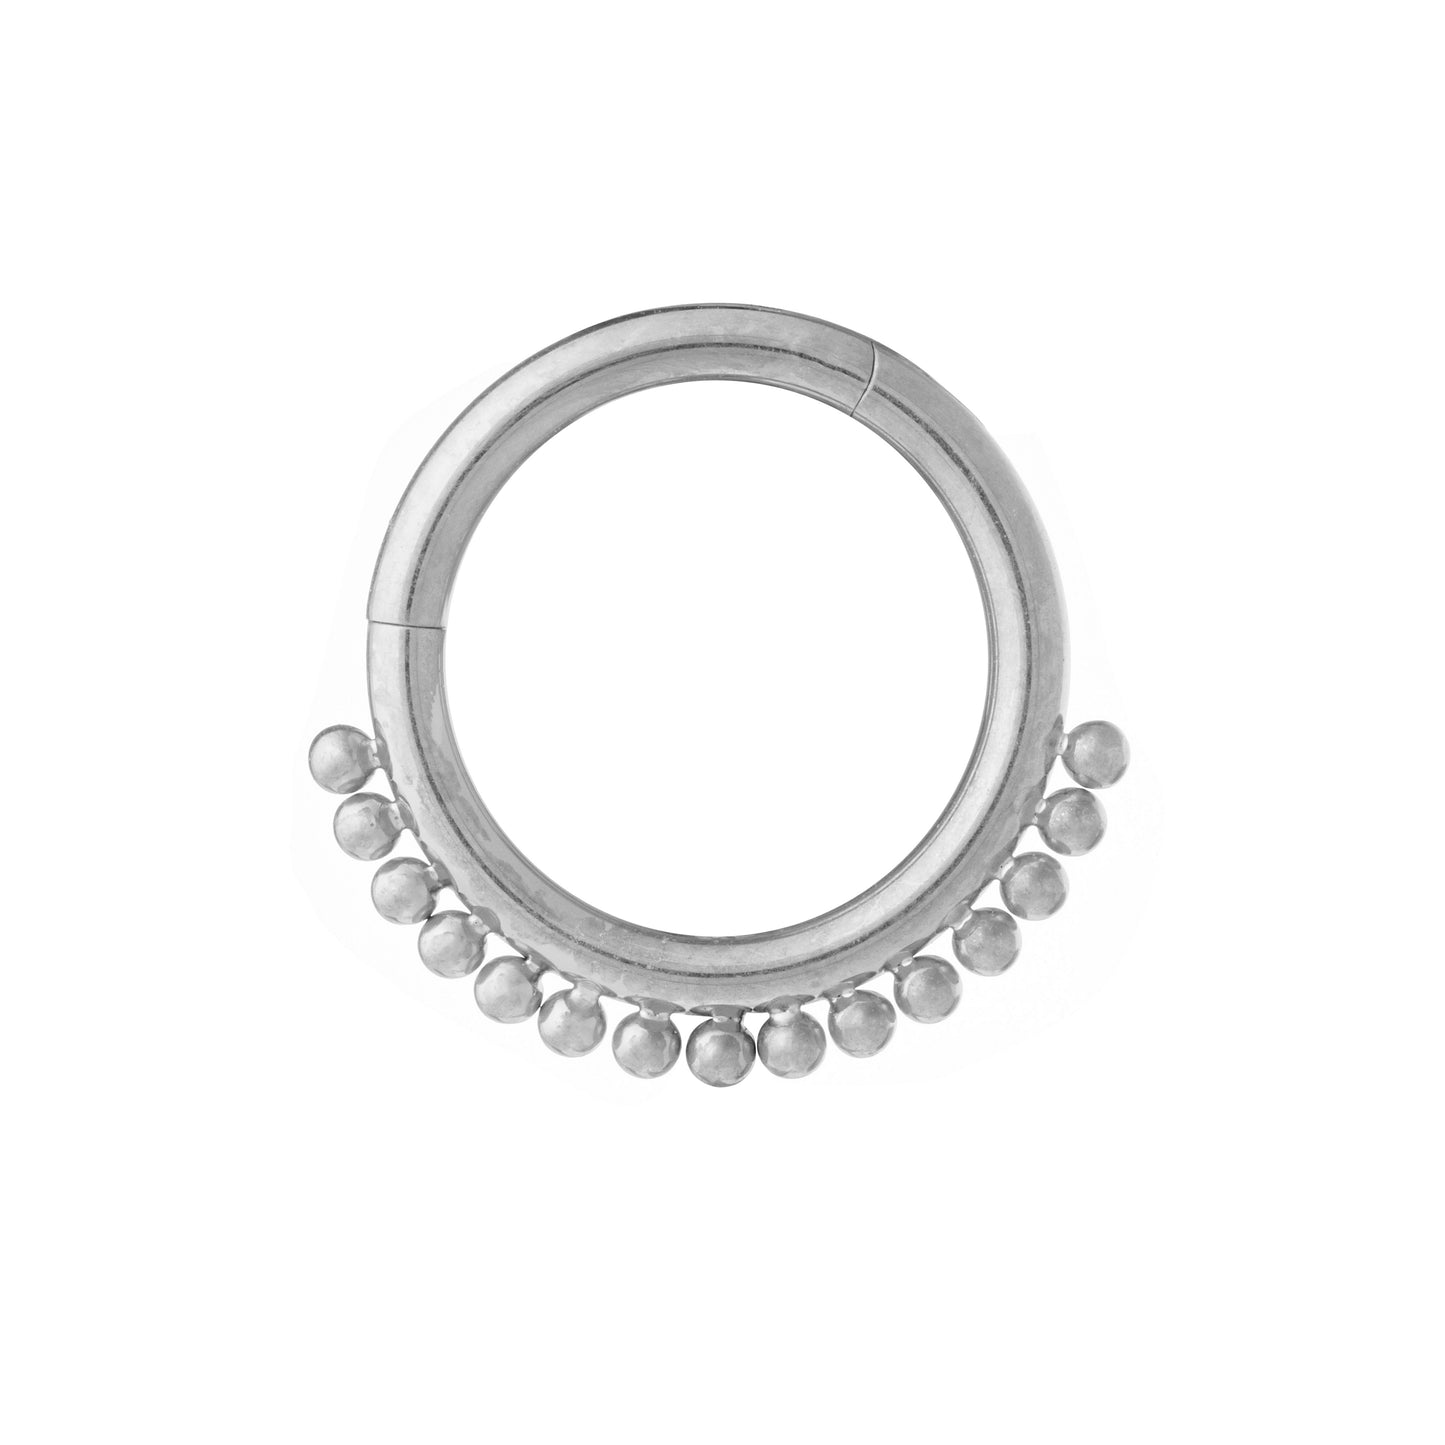 Titanium Hinged Segment Ring With Small Beads